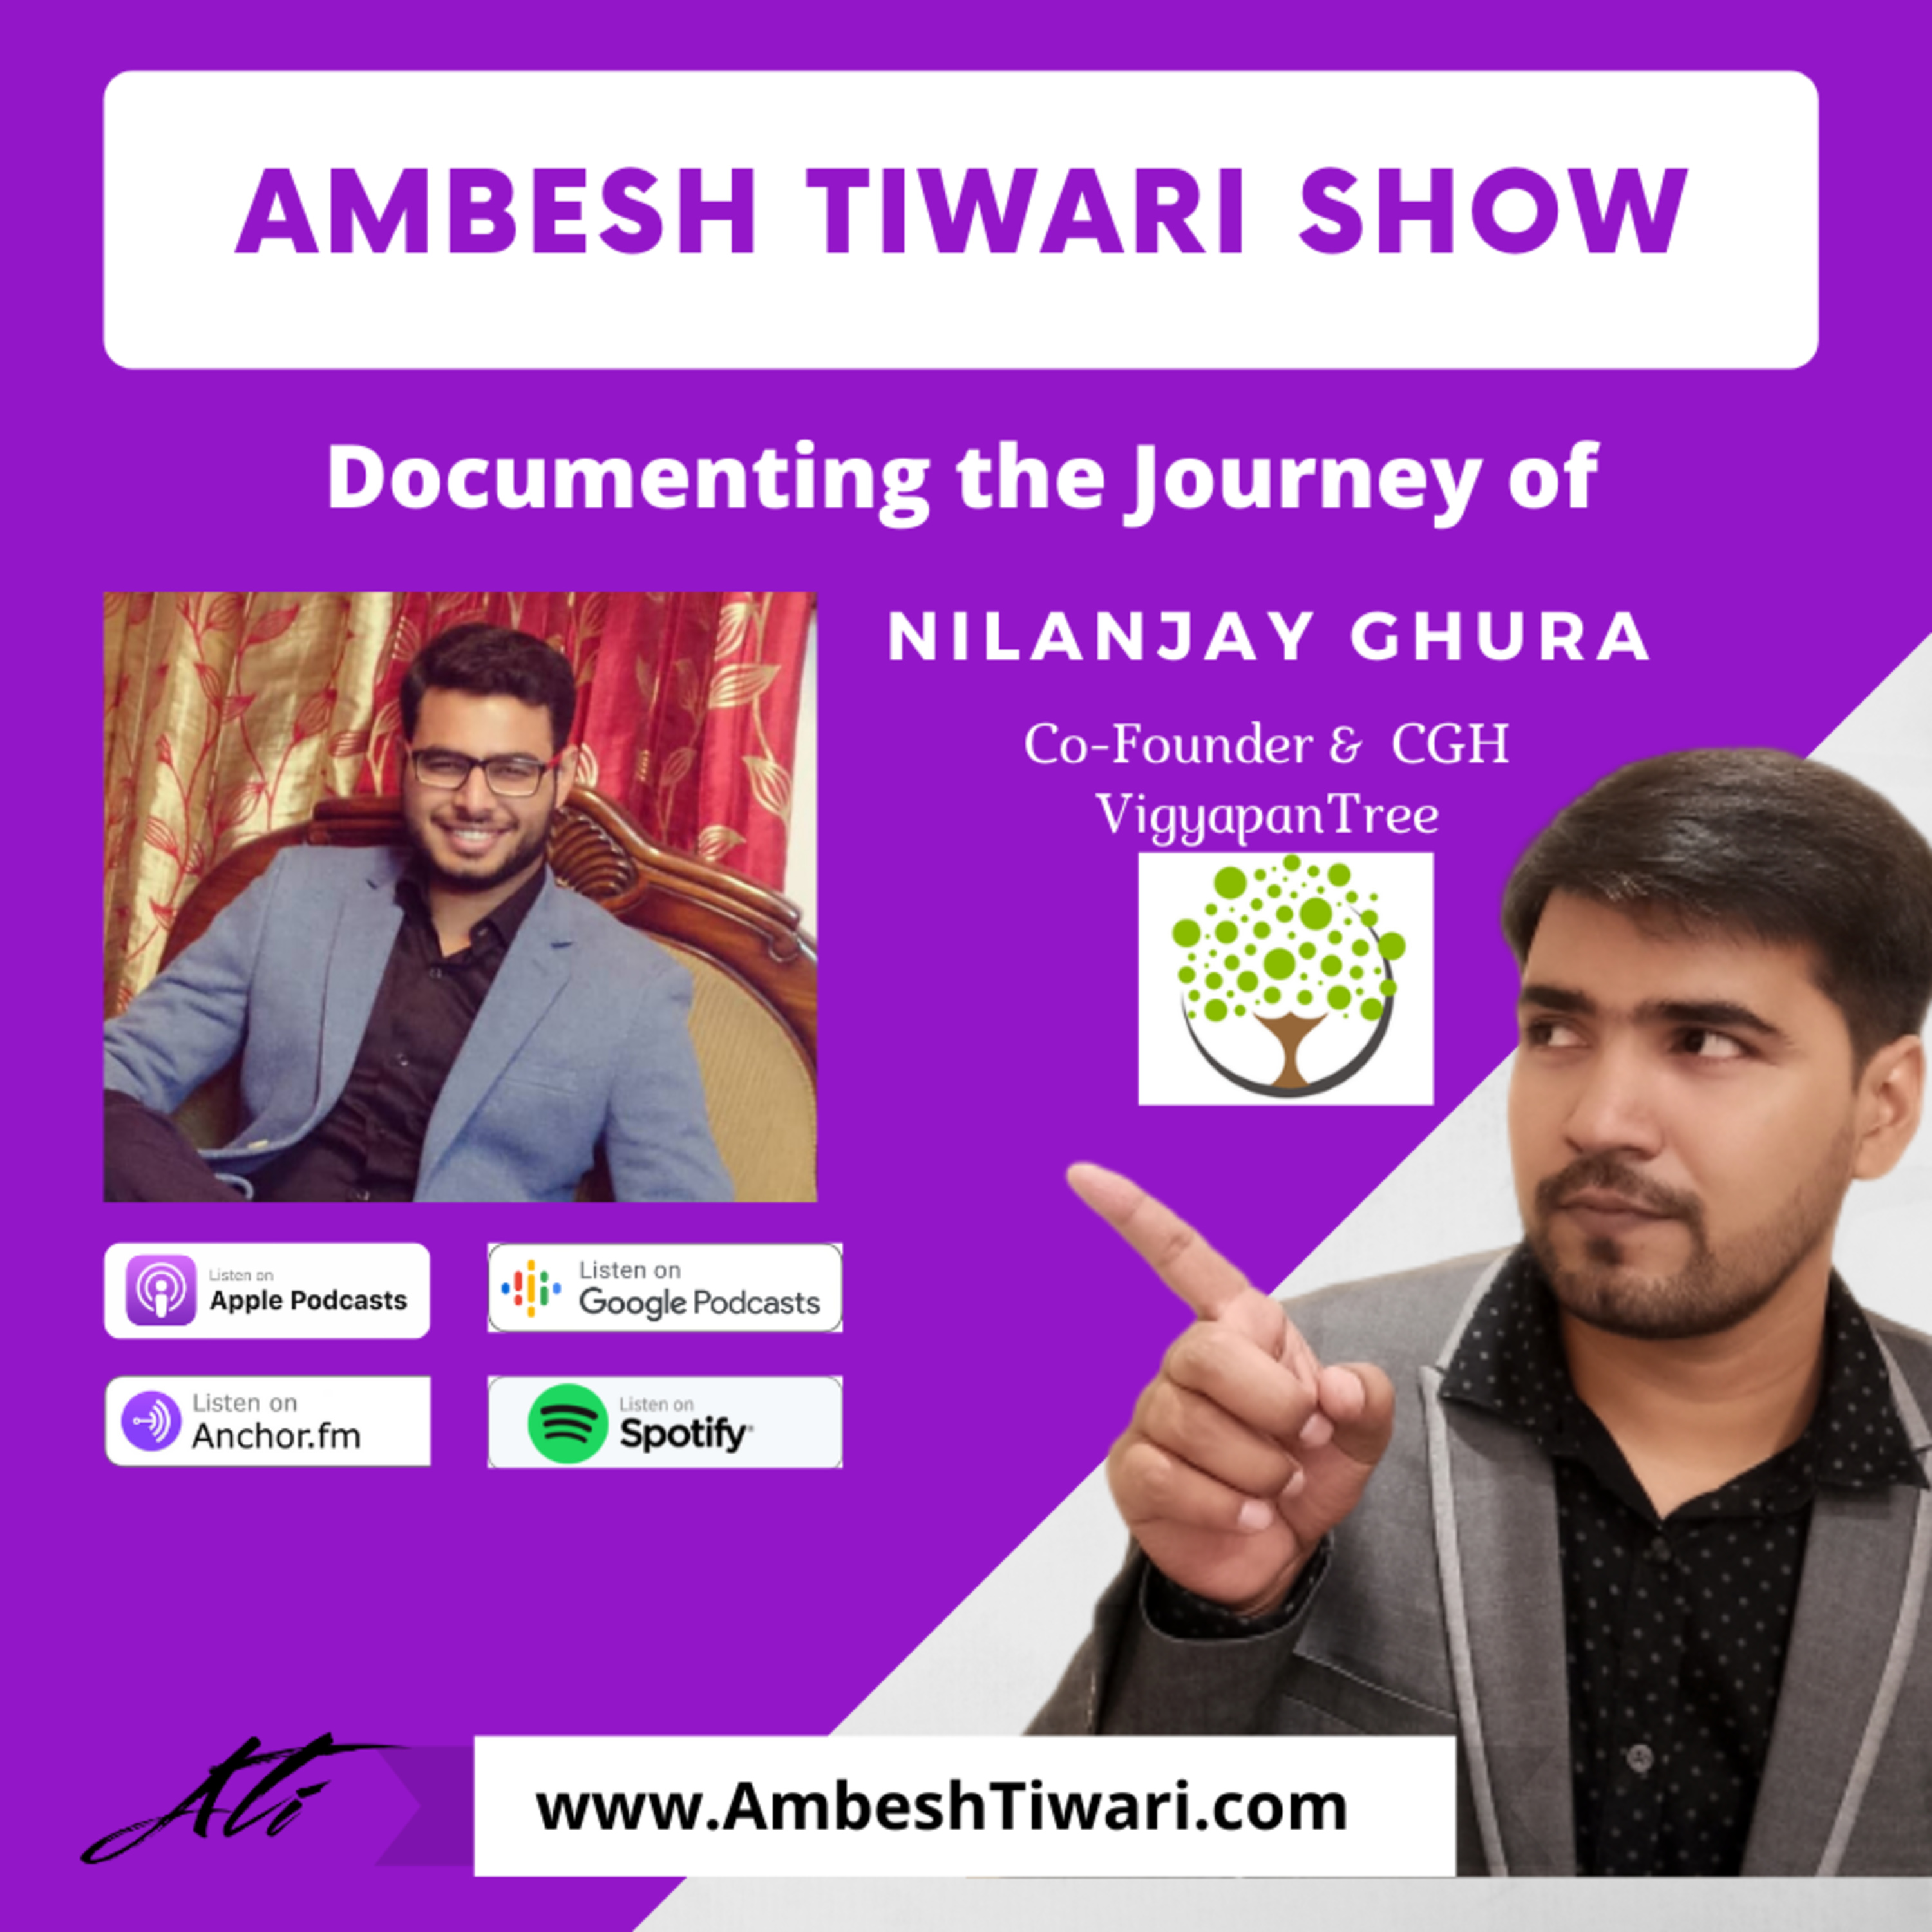 Interview of Nilanjay Ghura, Co-founder of VigyapanTree on Ambesh Tiwari Show